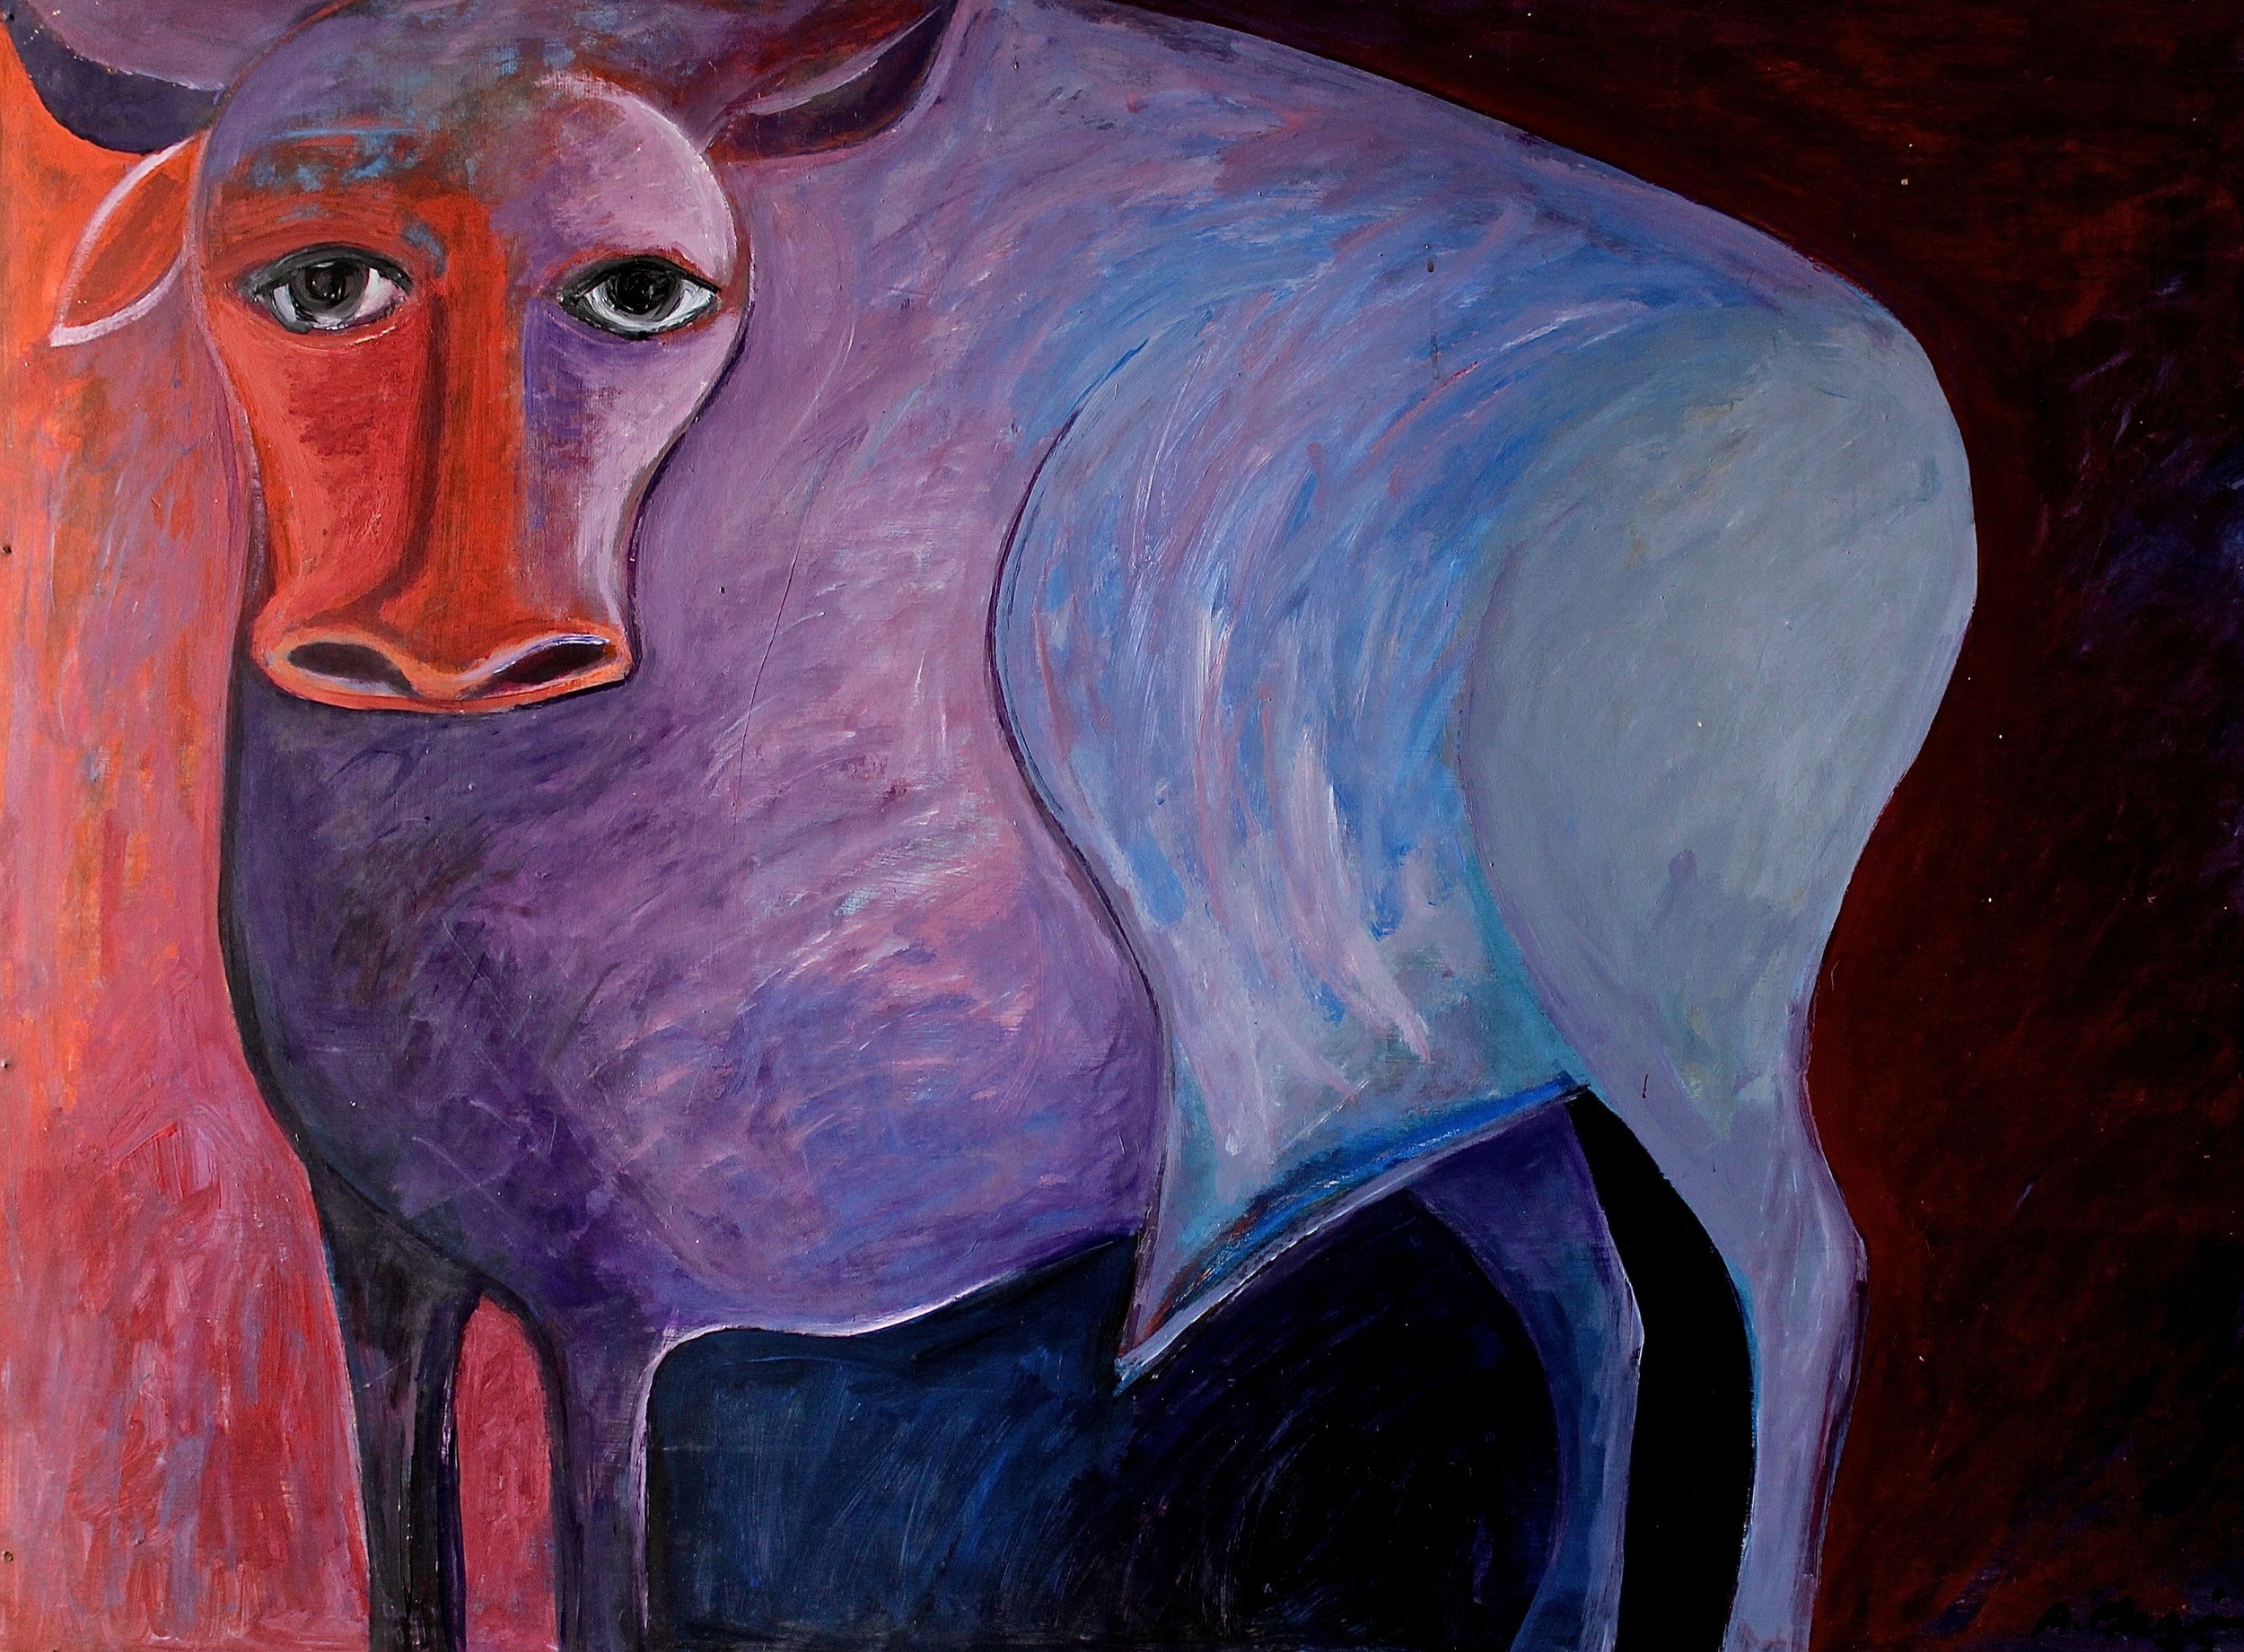  Ahmed Morsi, Untitled,&nbsp;1969,&nbsp;Oil on canvas,&nbsp;124 x 73 cm.    